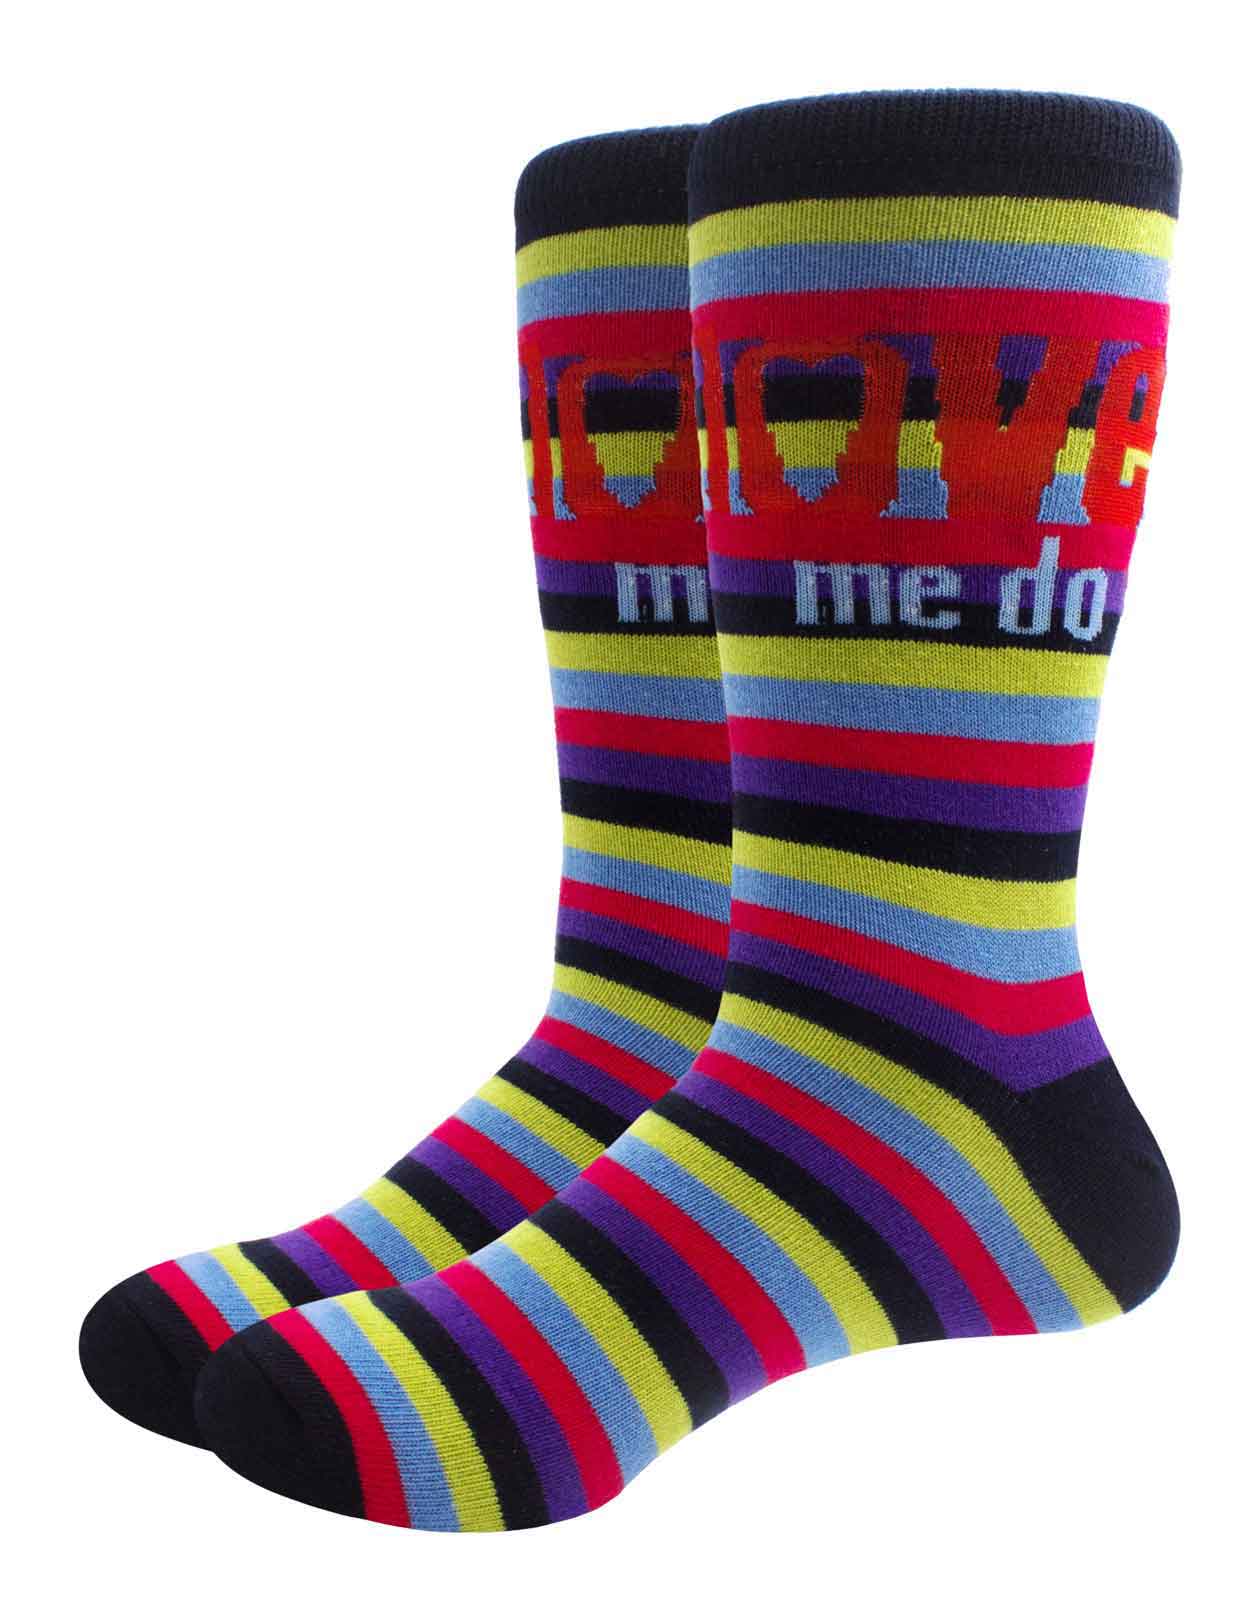 The Beatles Love Me Do Stripes Socks